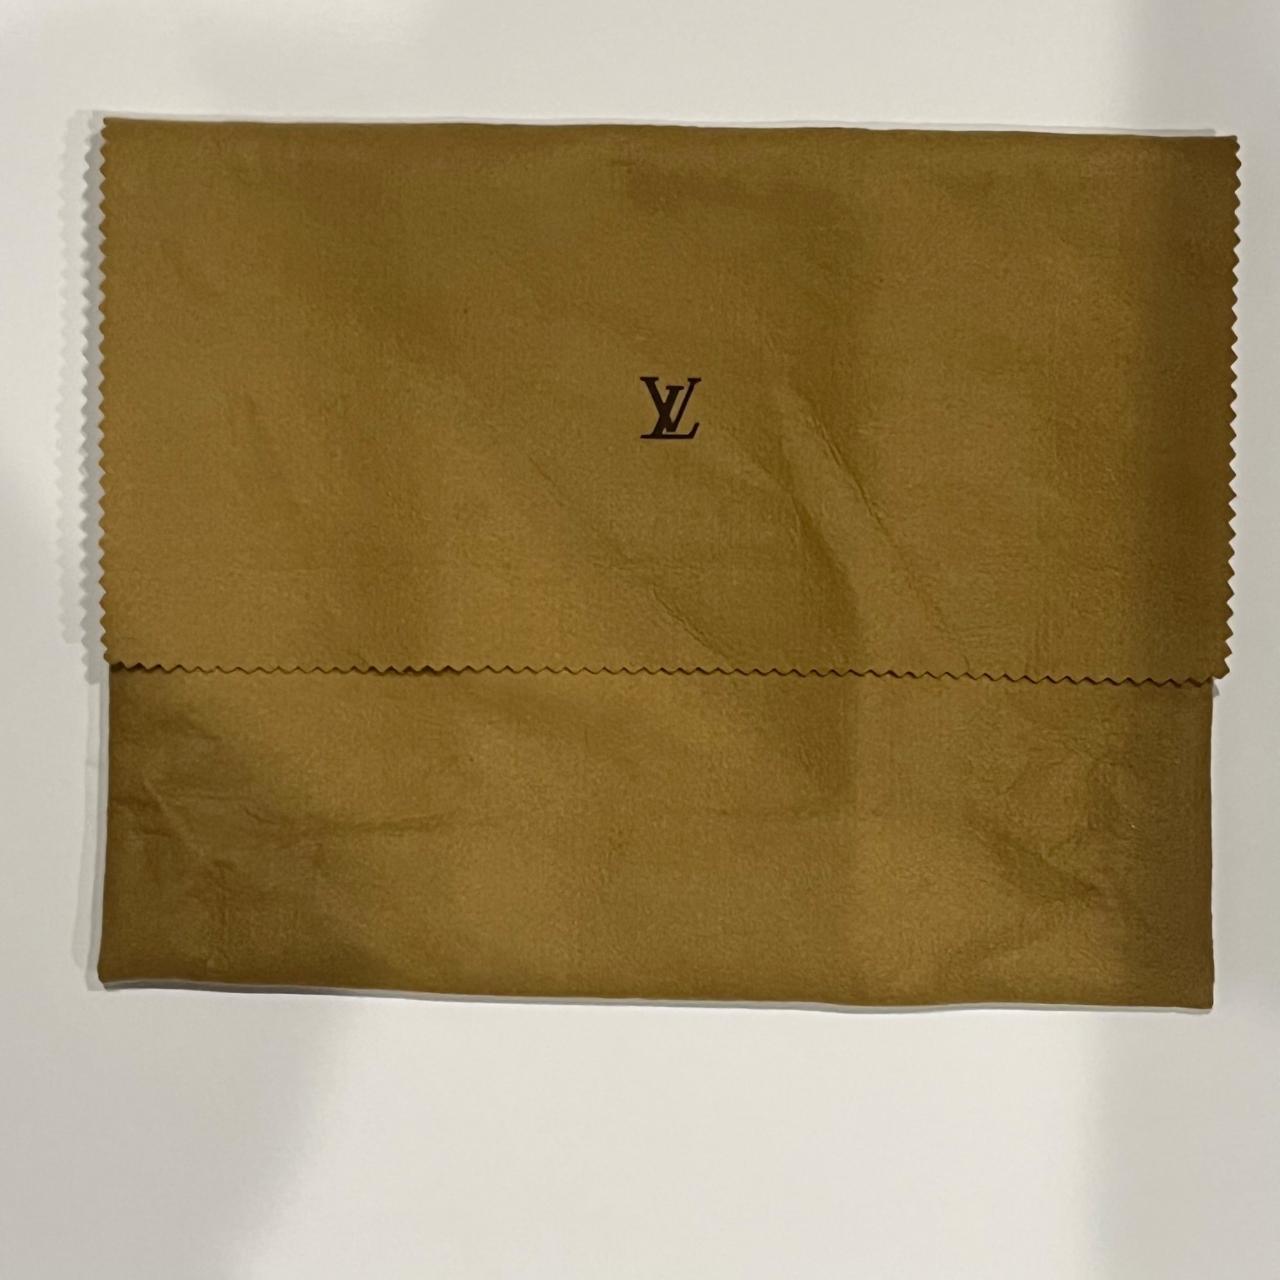 Louis Vuitton, Other, Authentic Louis Vuitton Small Dustbag